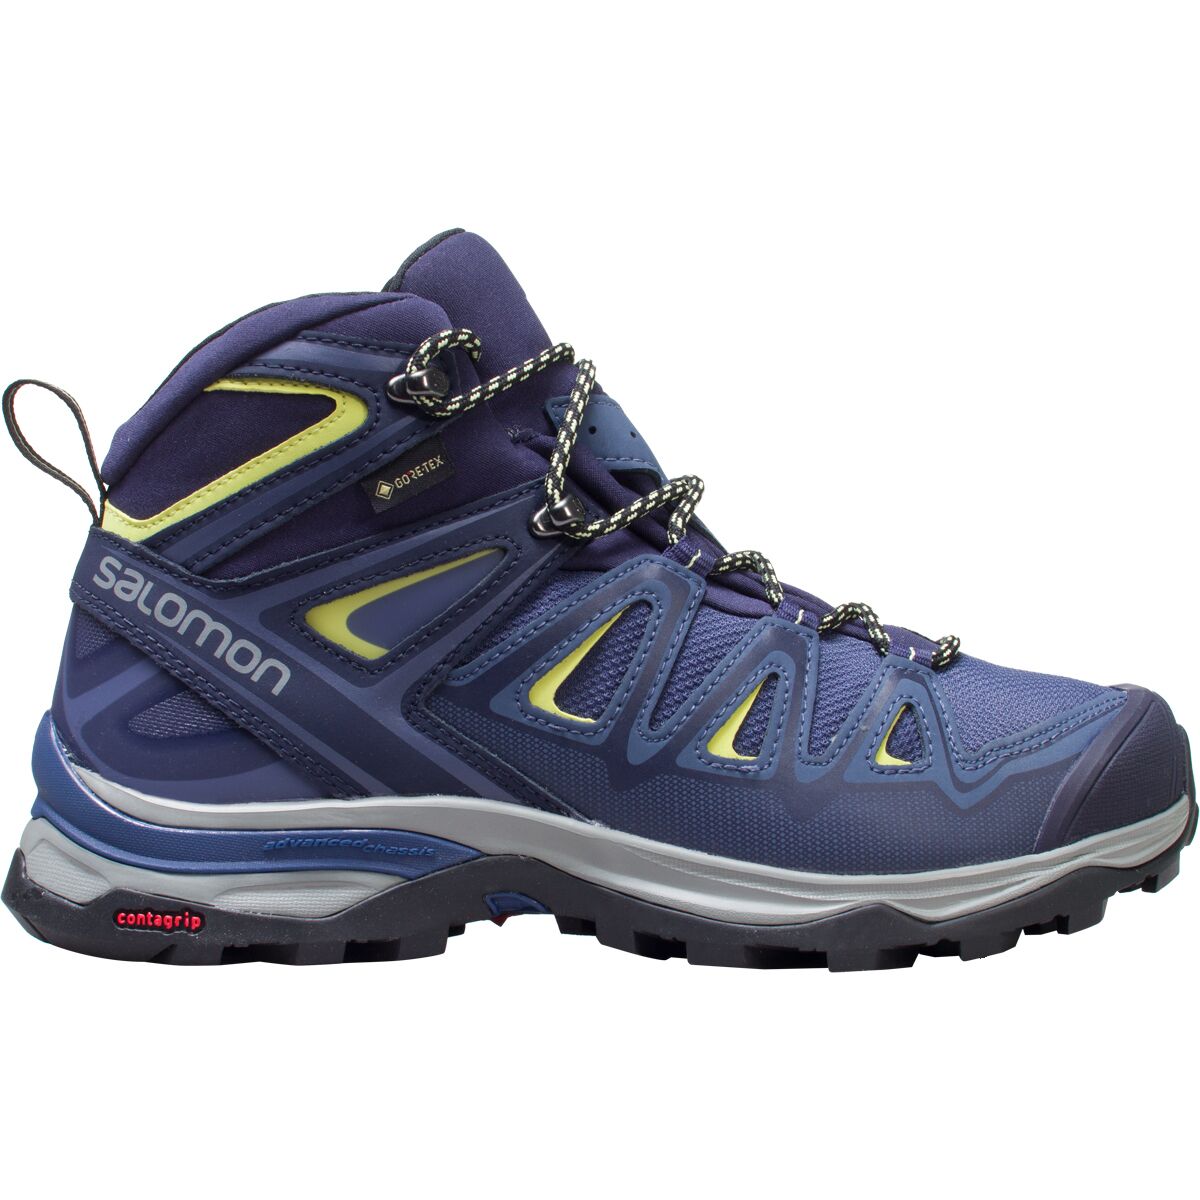 Salomon X Ultra 3 Mid GTX Wide Hiking Boot Women's